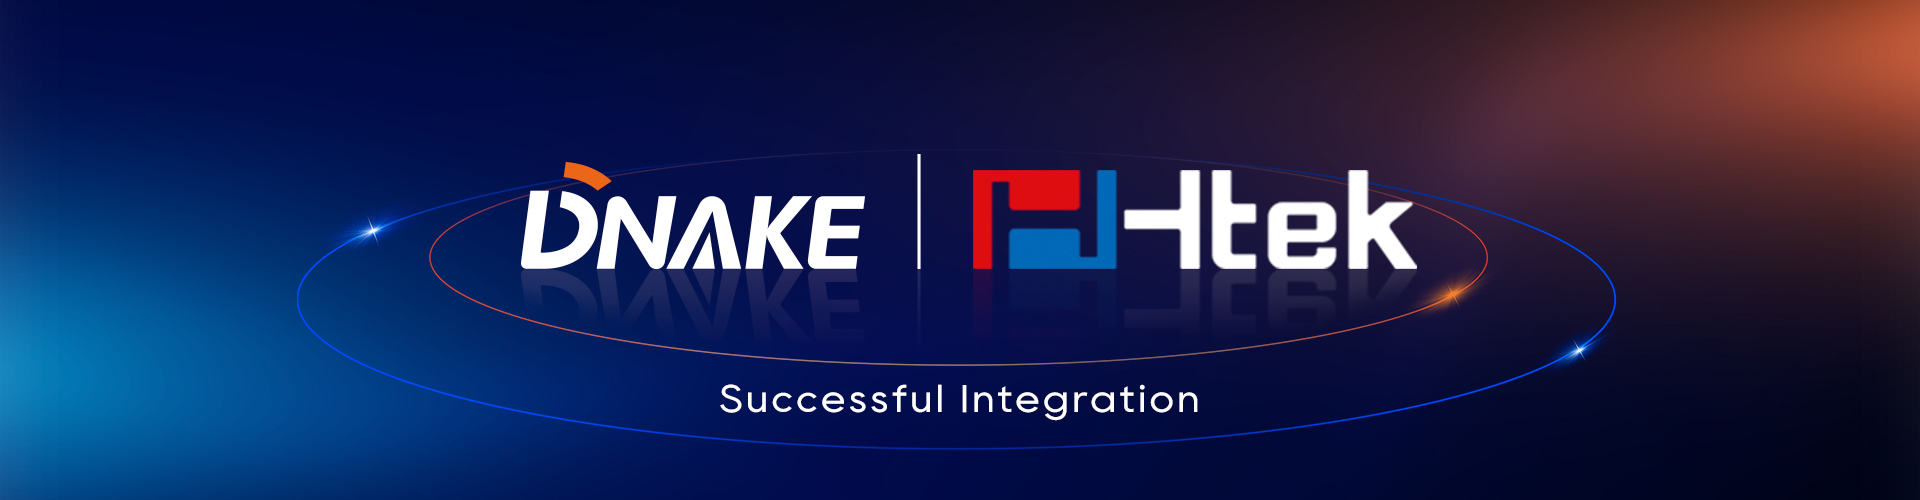 DNAKE_Htek Integration_News Banner